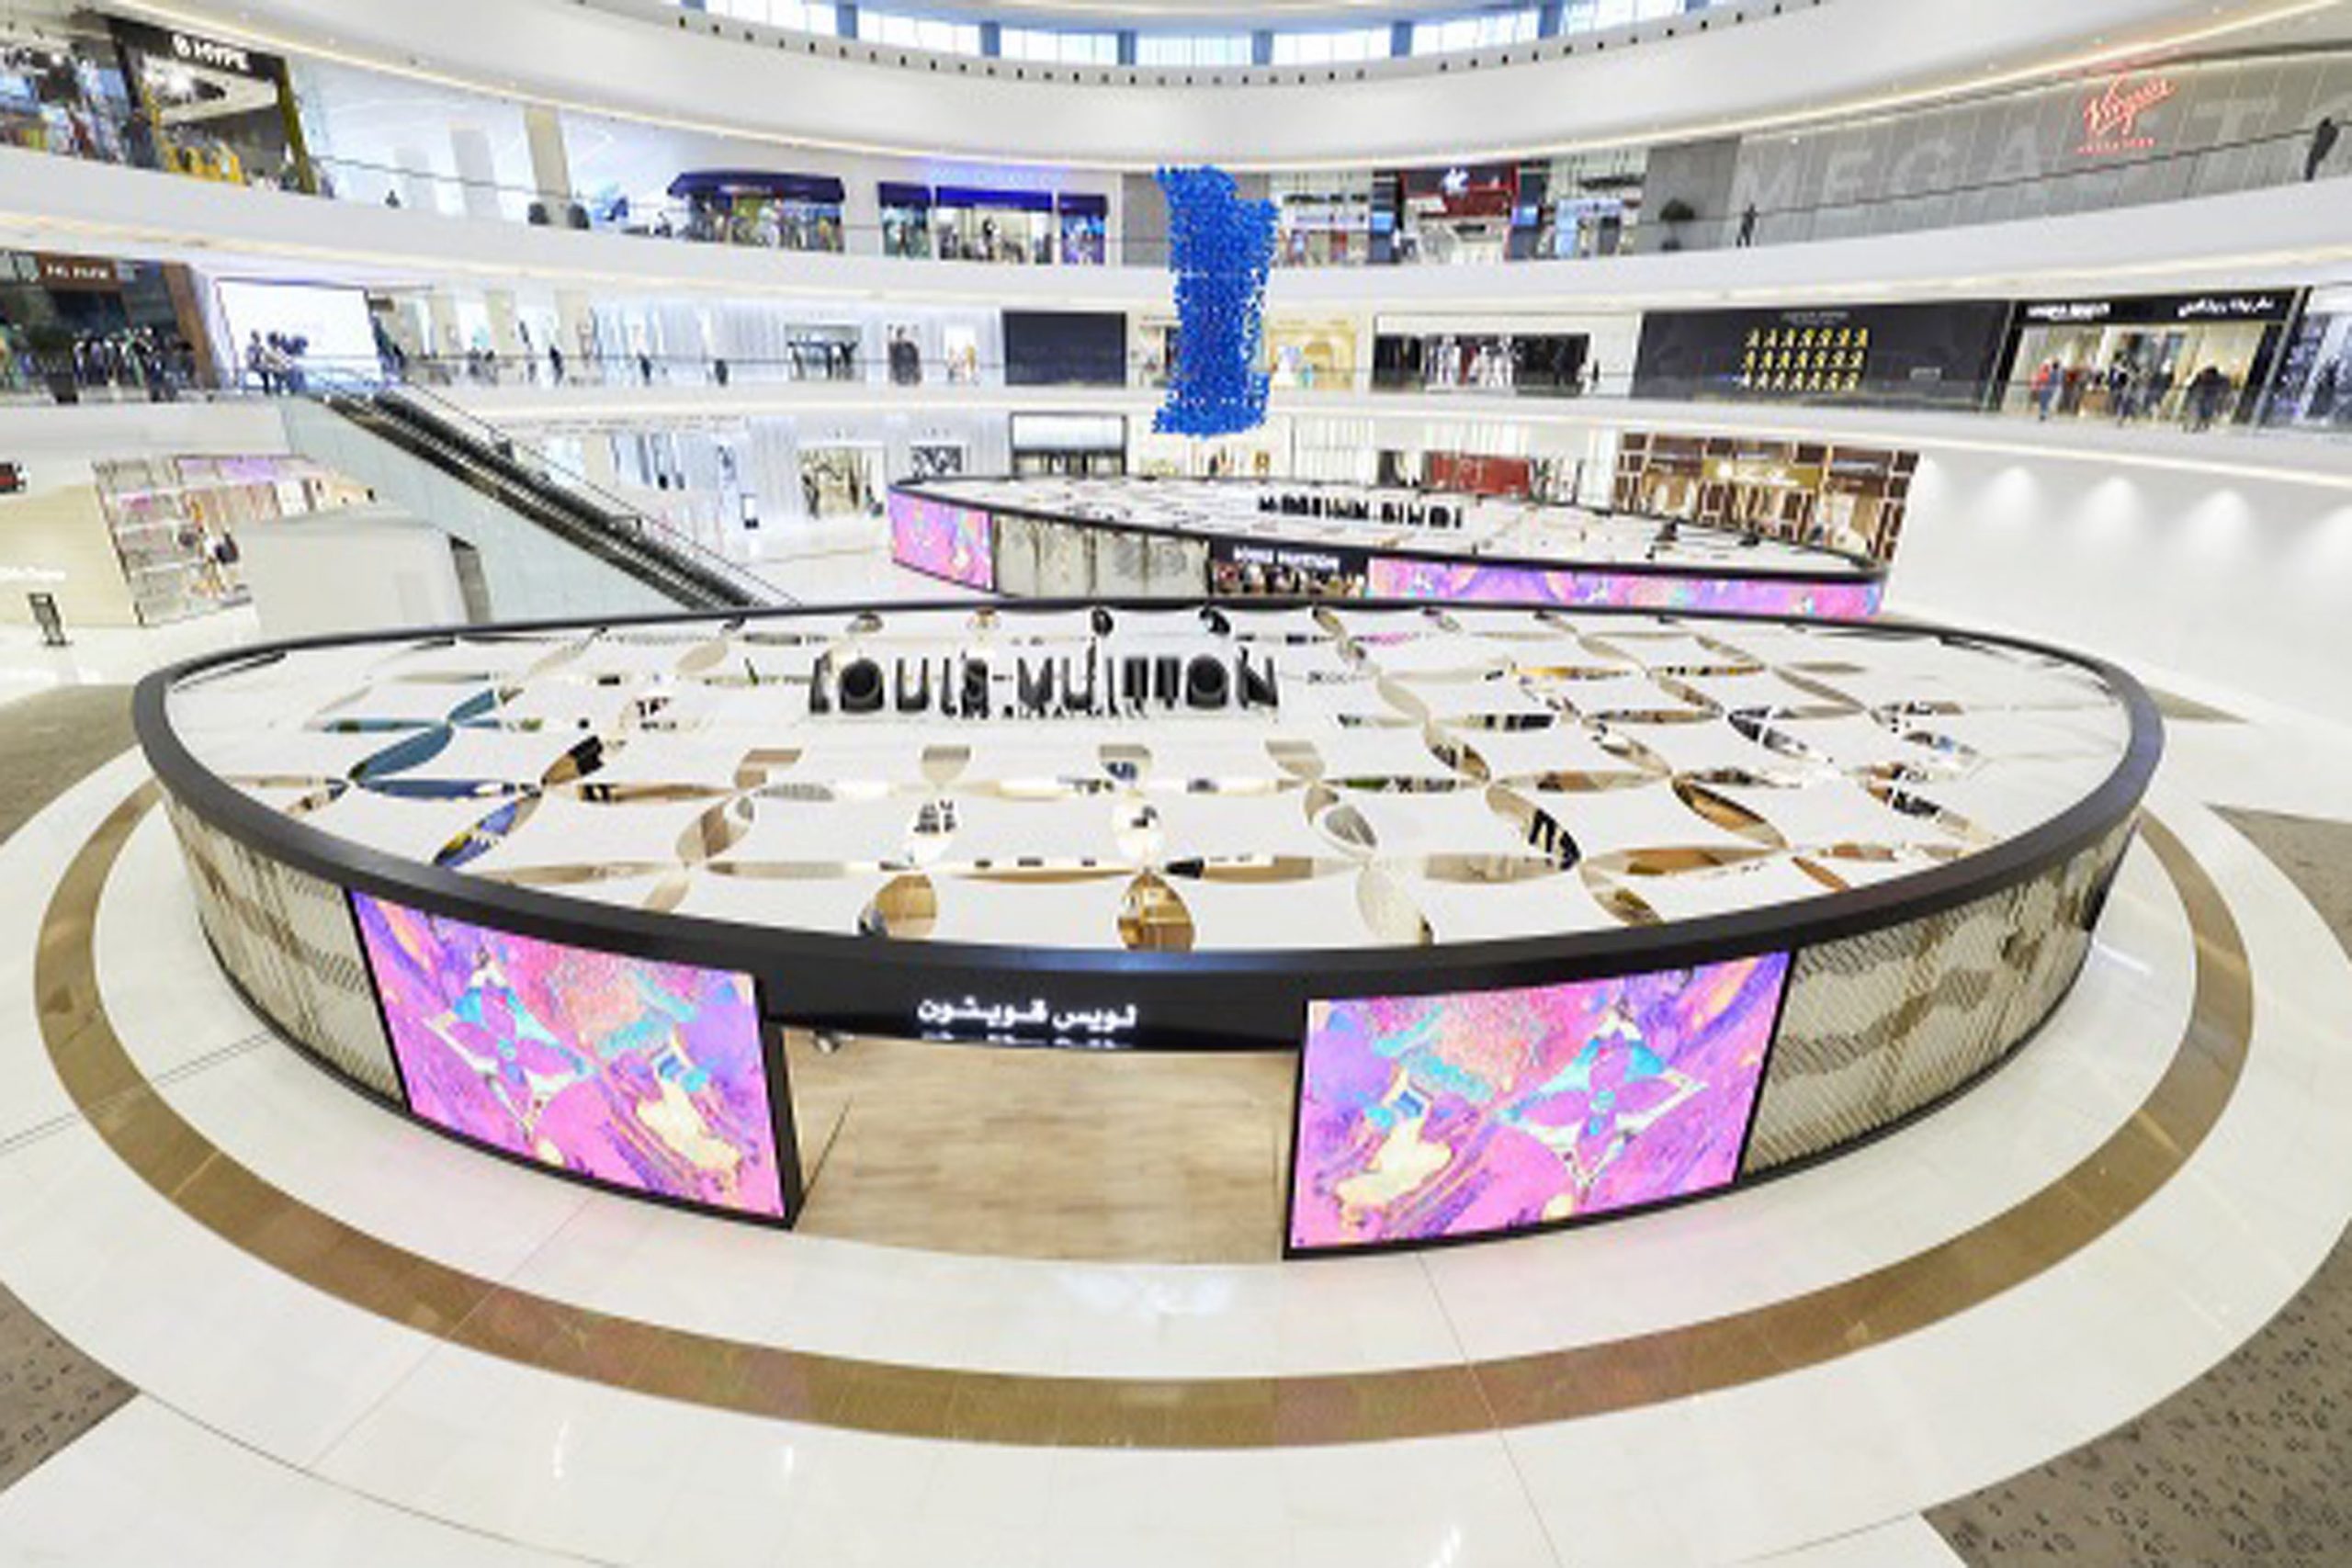 LOUIS VUITTON ABU DHABI THE GALLERIA AL MARYAH ISLAND Store in Abu Dhabi,  United Arab Emirates